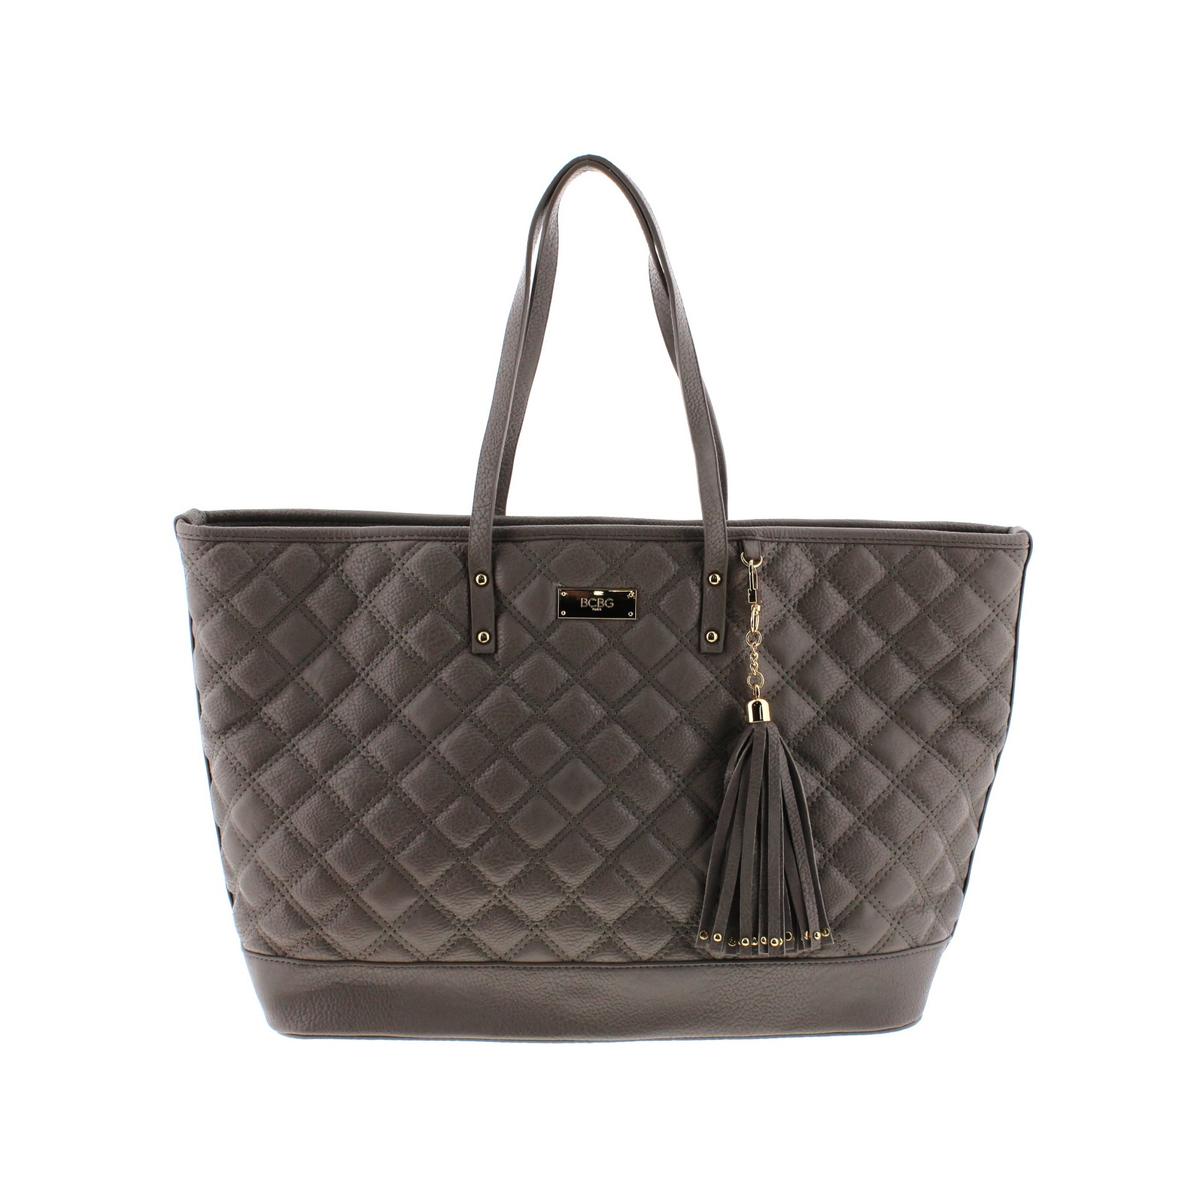 BCBG Paris 1385 Womens Quilted Faux Leather Tote Handbag Purse BHFO | eBay